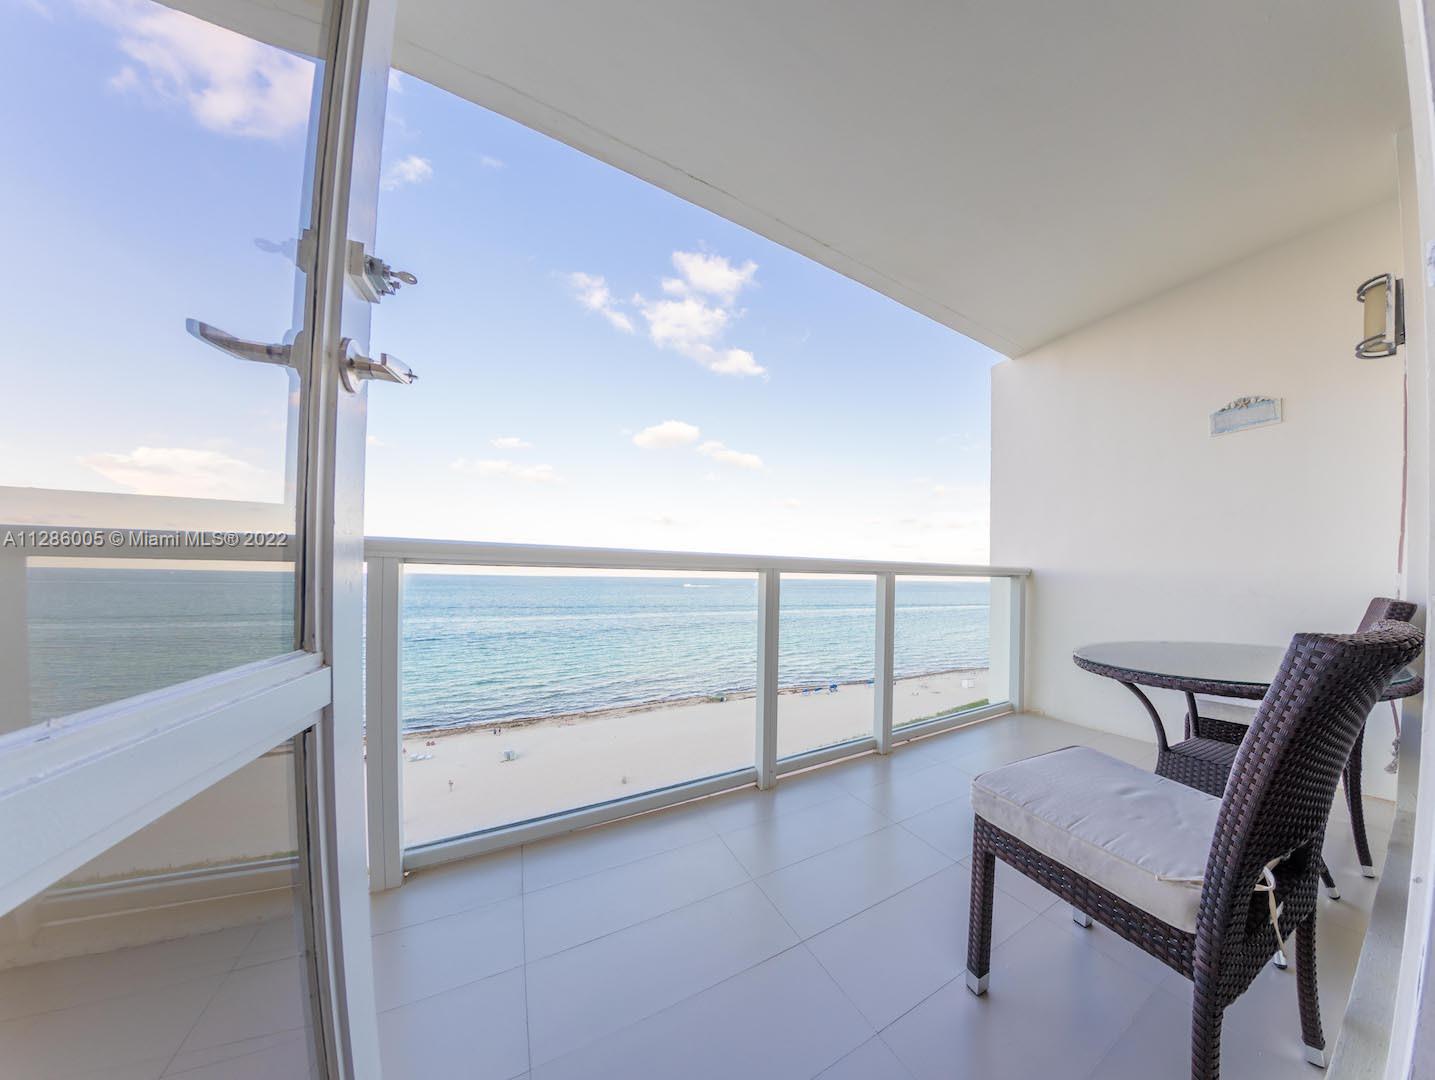 Rental Property at 5601 Collins Ave 1206, Miami Beach, Miami-Dade County, Florida - Bedrooms: 2 
Bathrooms: 2  - $4,850 MO.